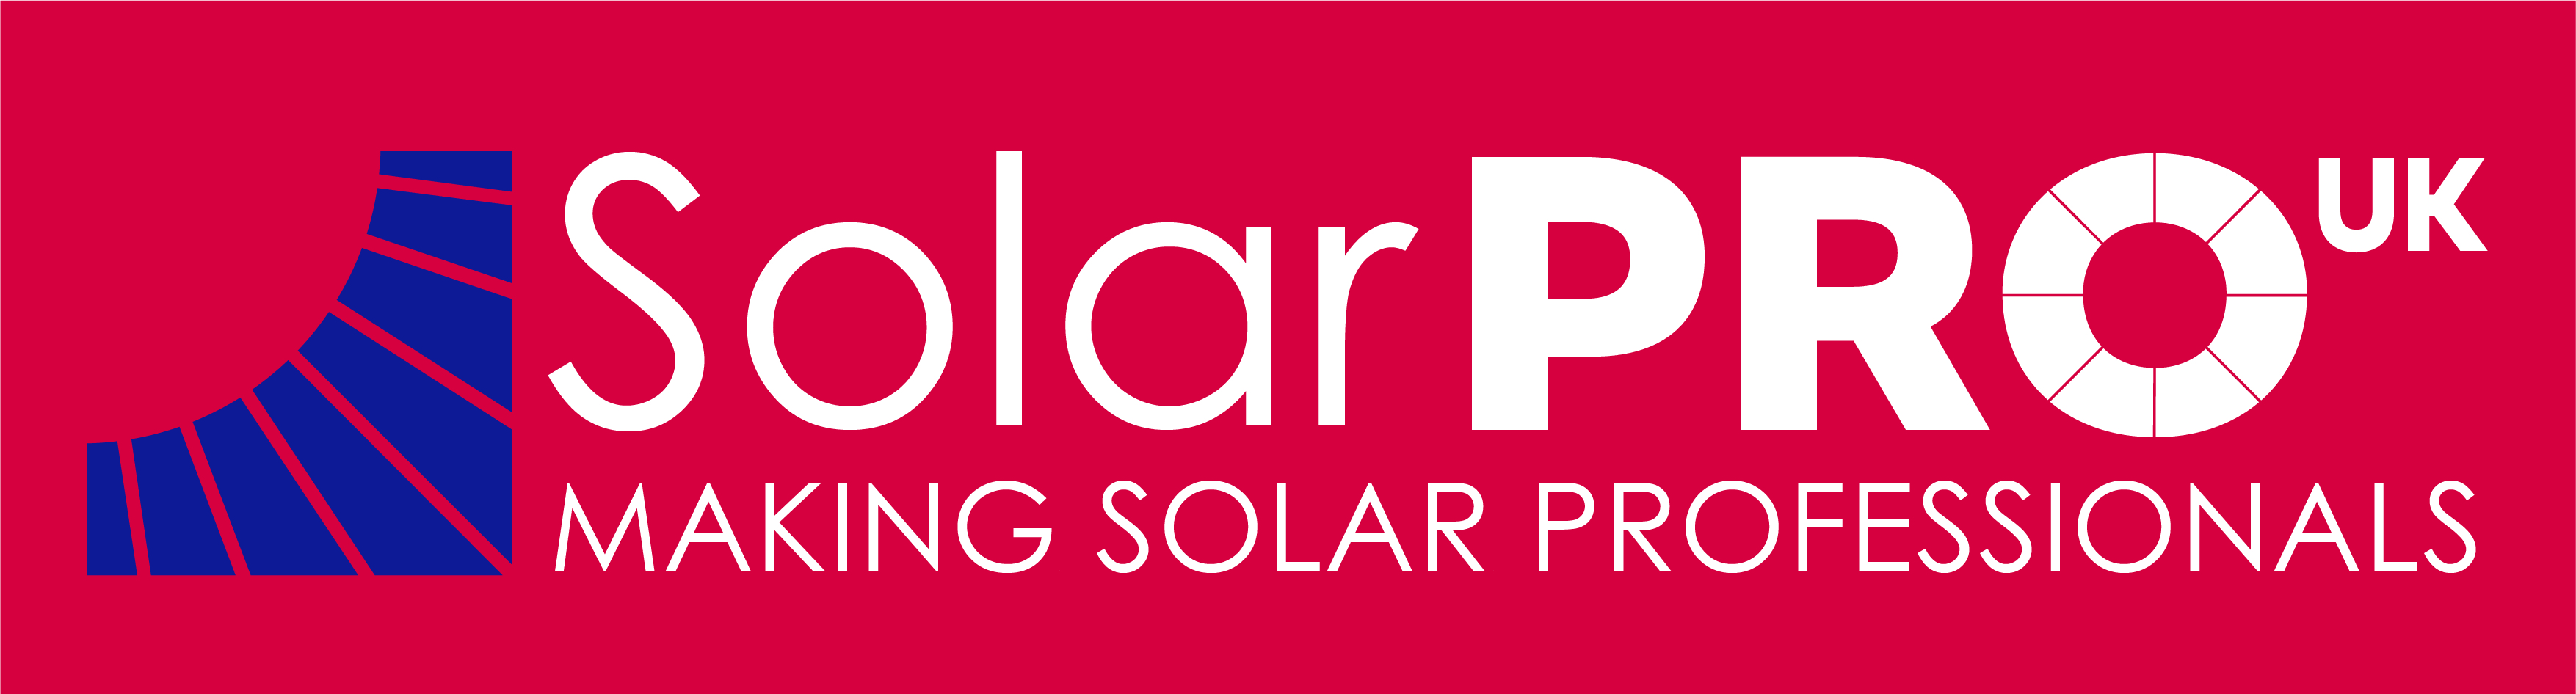 SolarPRO UK